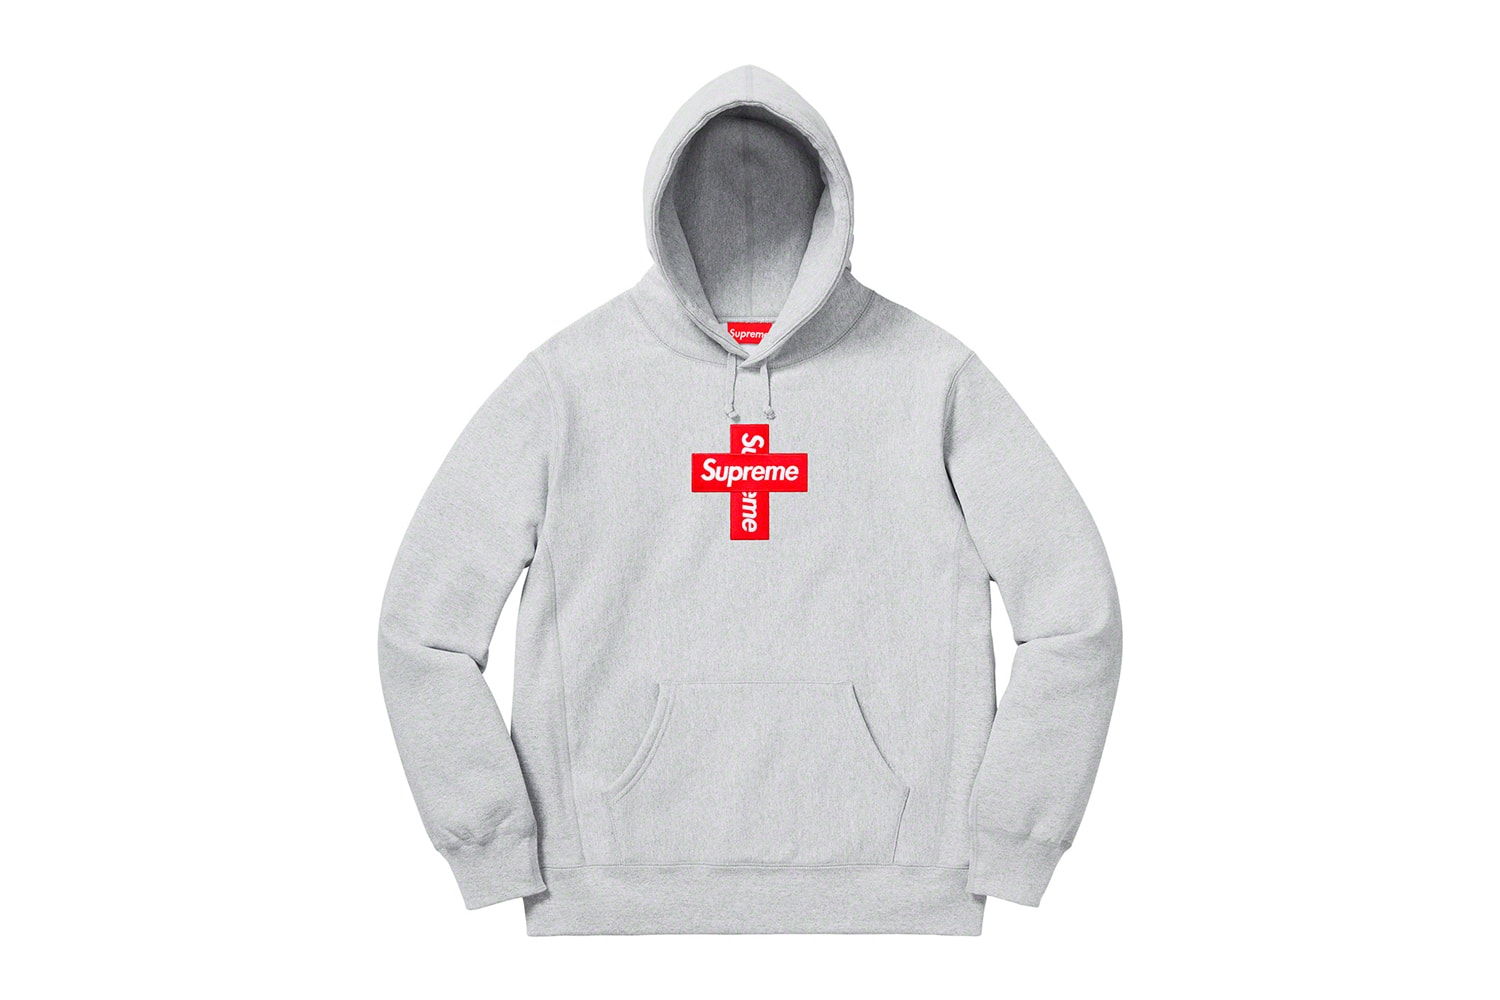 White red supreme hoodie denim jacket street style streetwear box logo